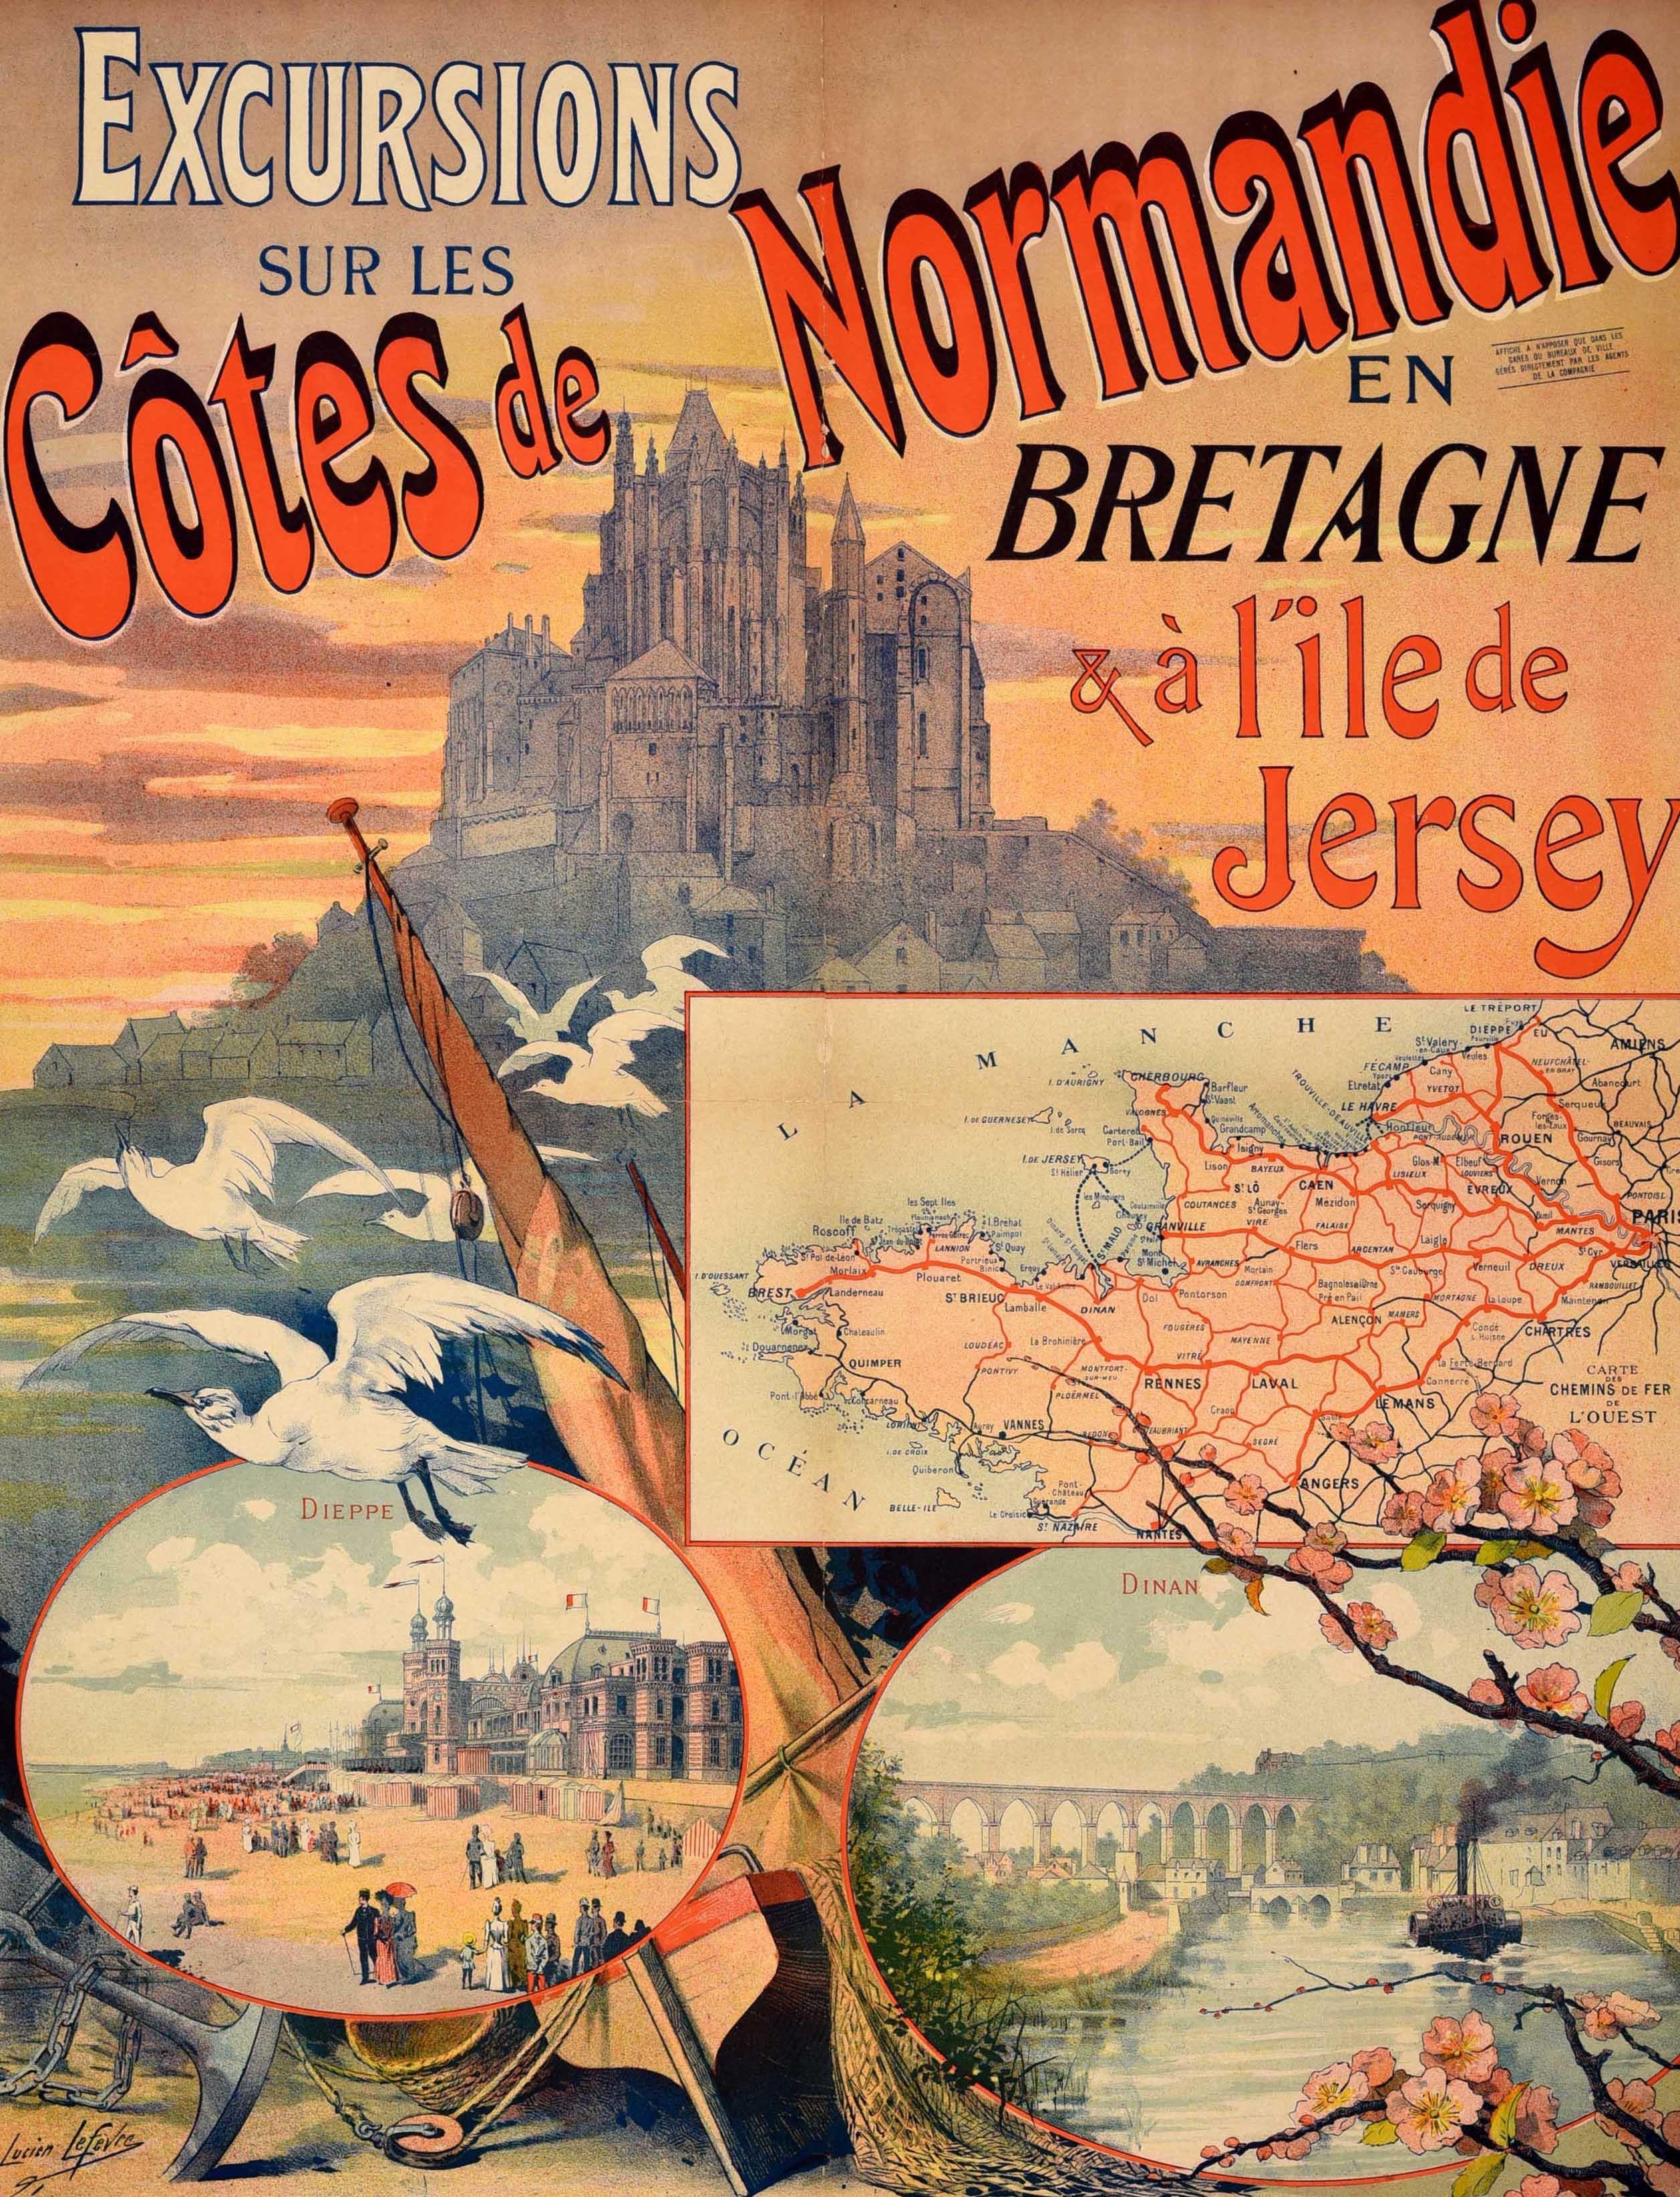 Original Antique Train Travel Poster Normandy Brittany Jersey Coast Excursions - Print by Lucien Lefevre